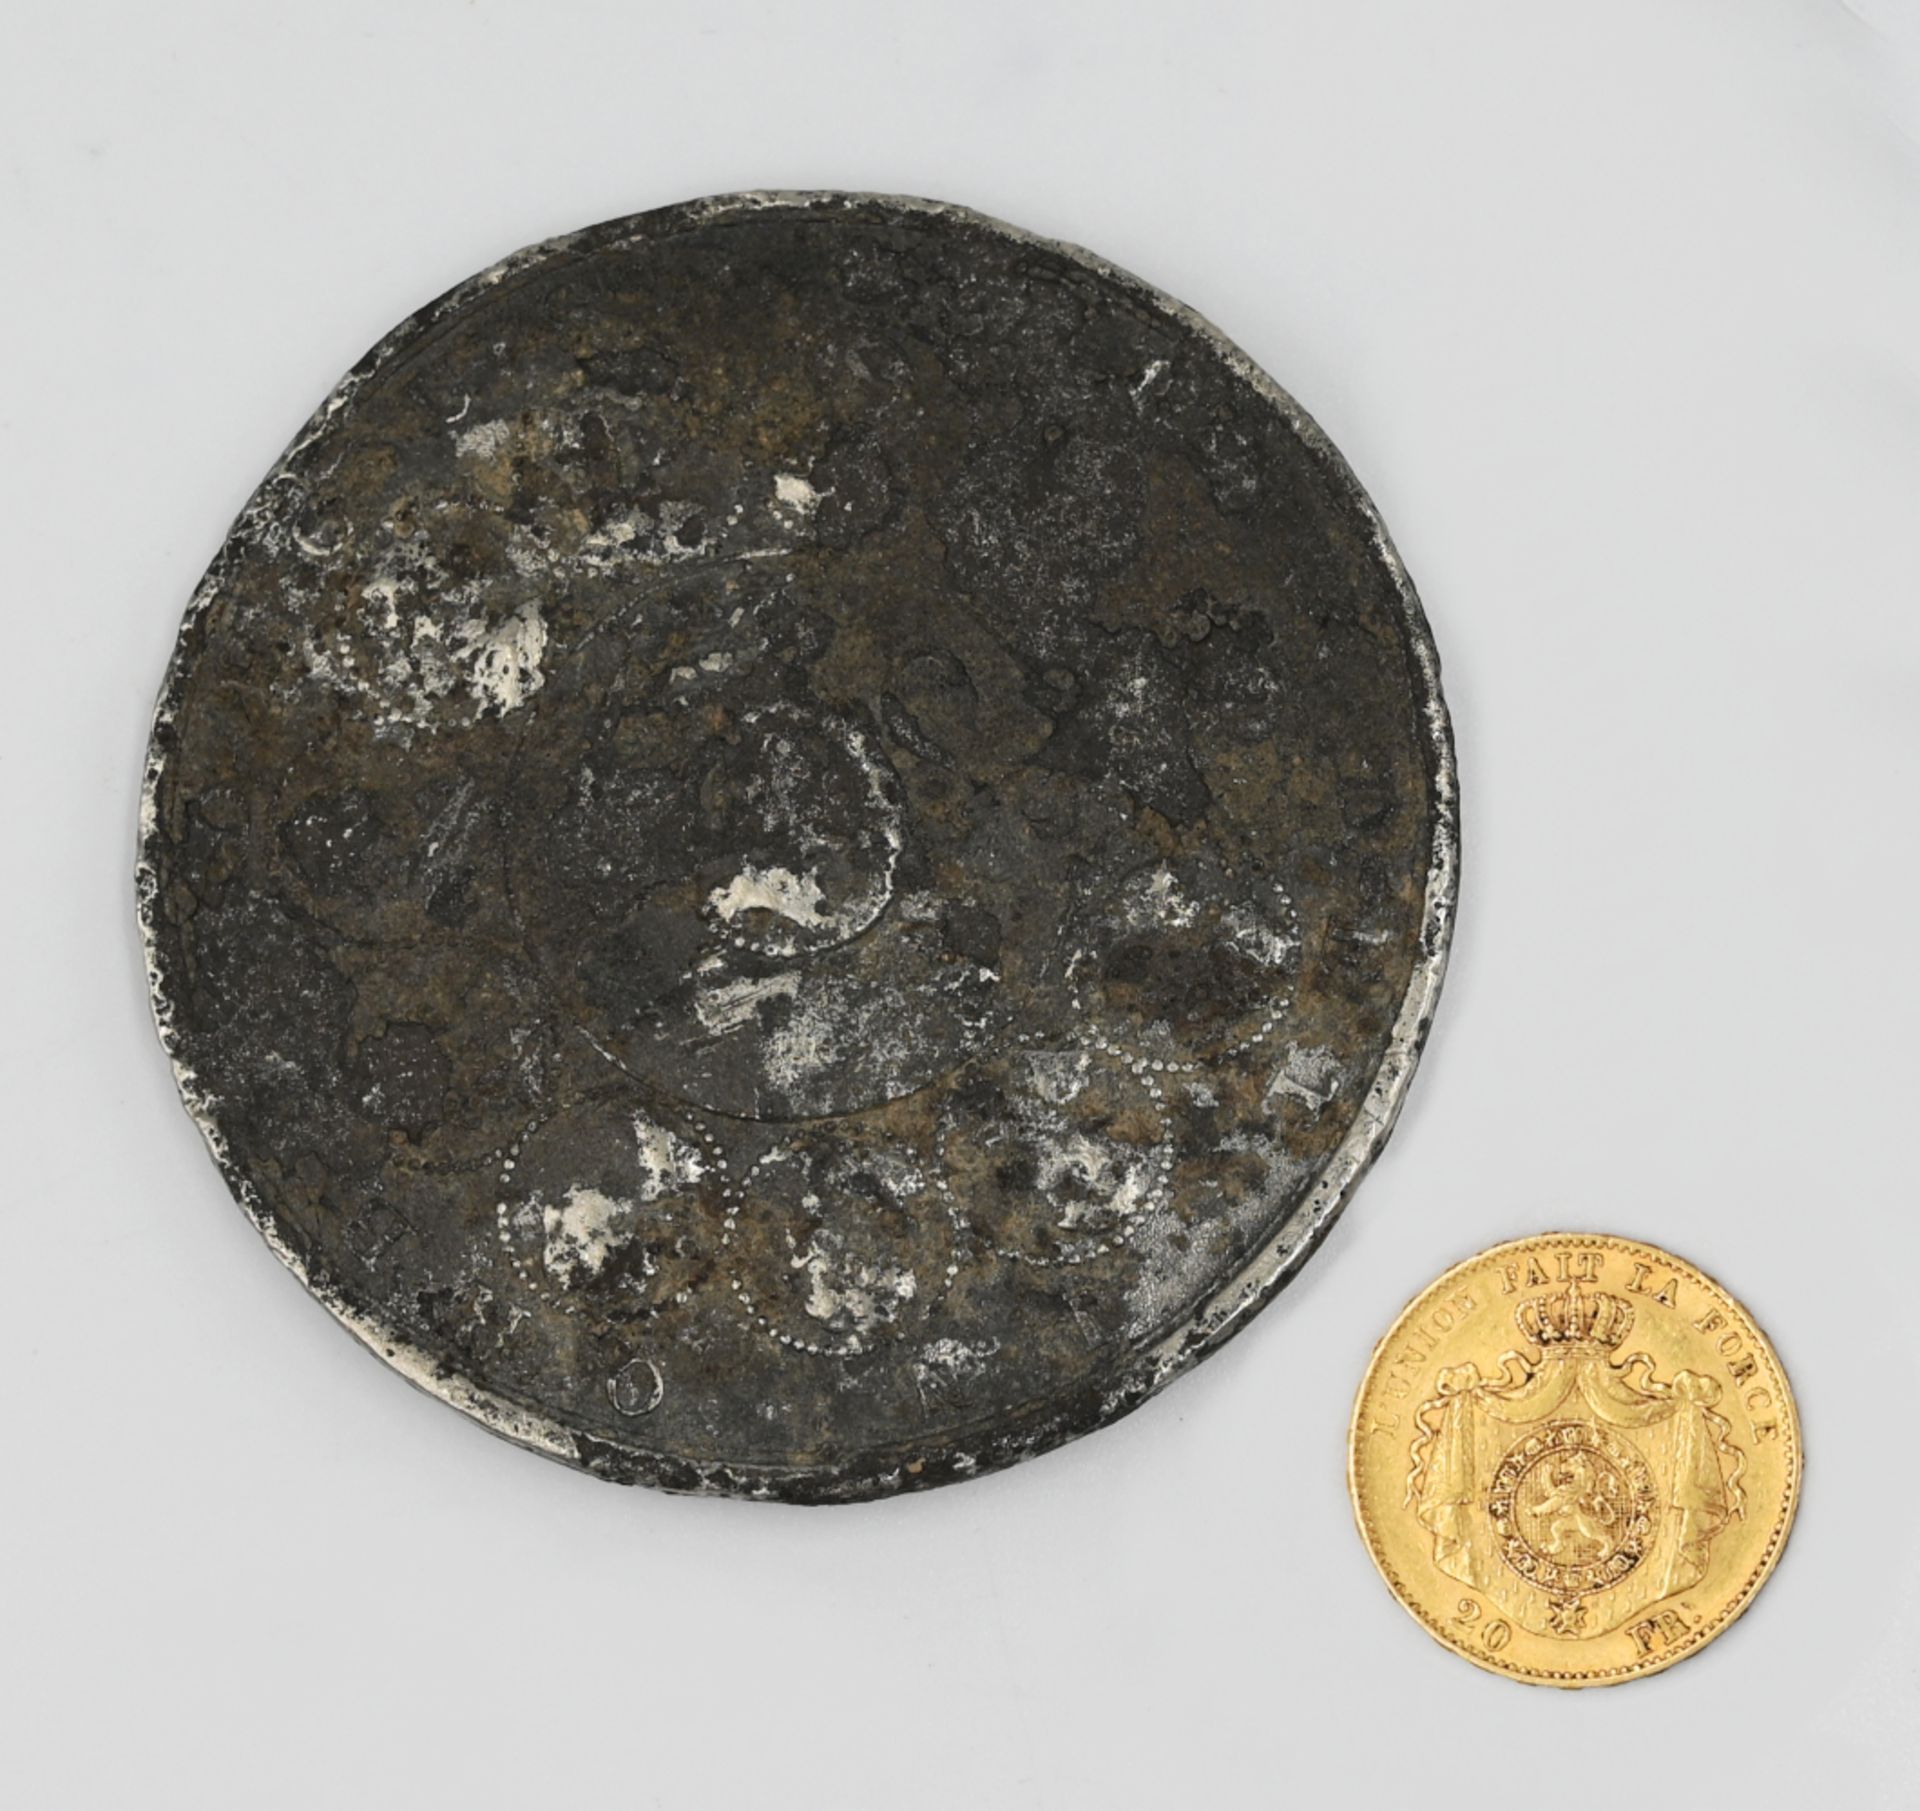 1 Münze GG Belgien 1867 gepunzt "20 Fr" sowie 1 Medaille Metall jew. Asp./ Gsp. - Image 2 of 2